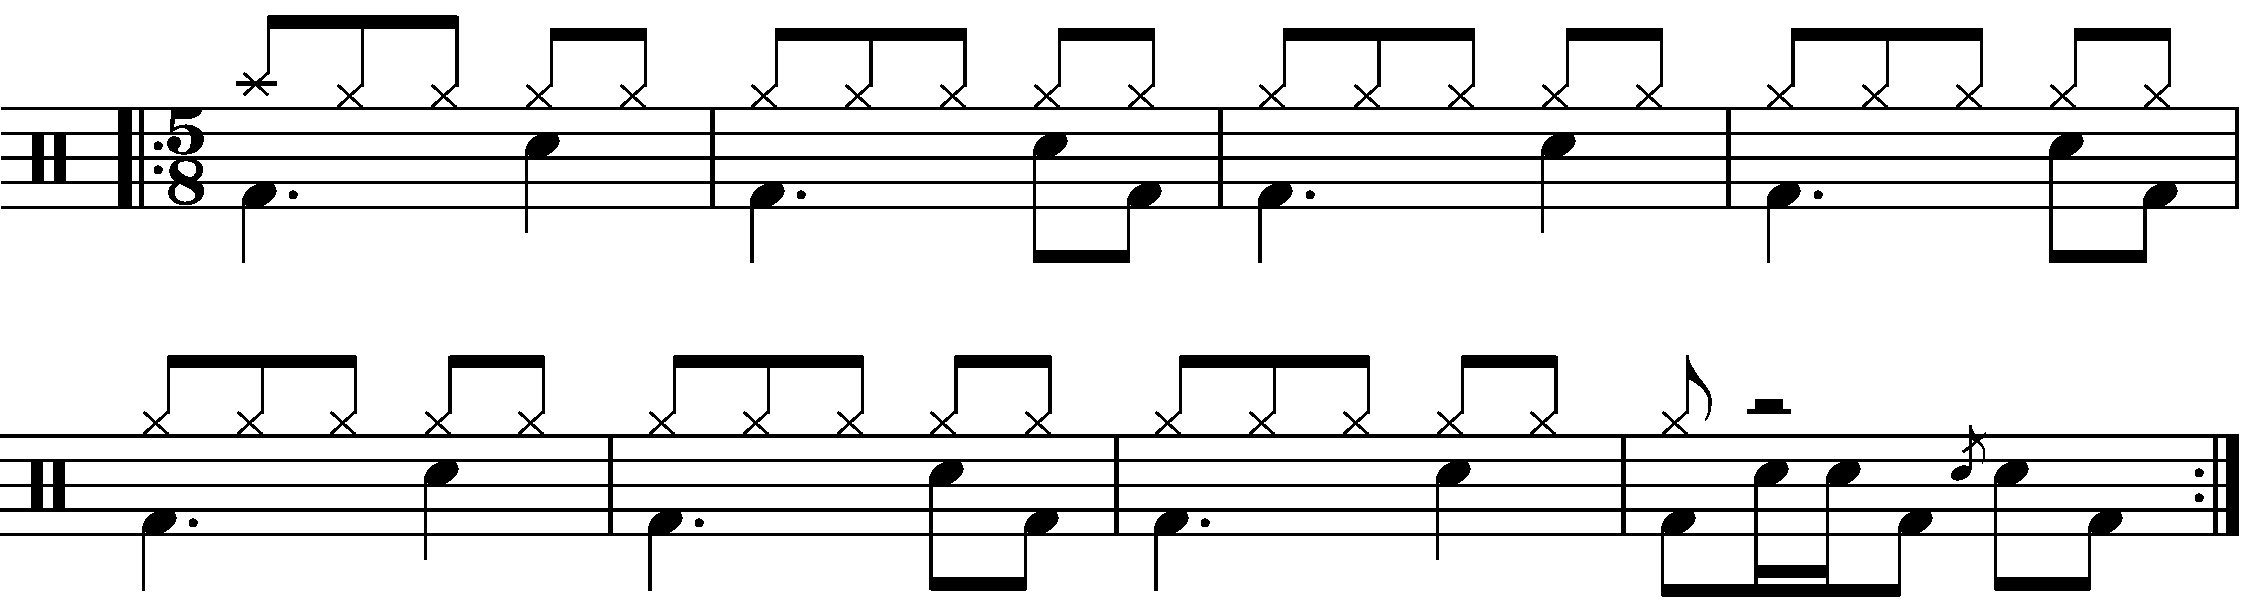 An eight bar phrase built of an AAAB pattern using 2 bar 5/8 grooves